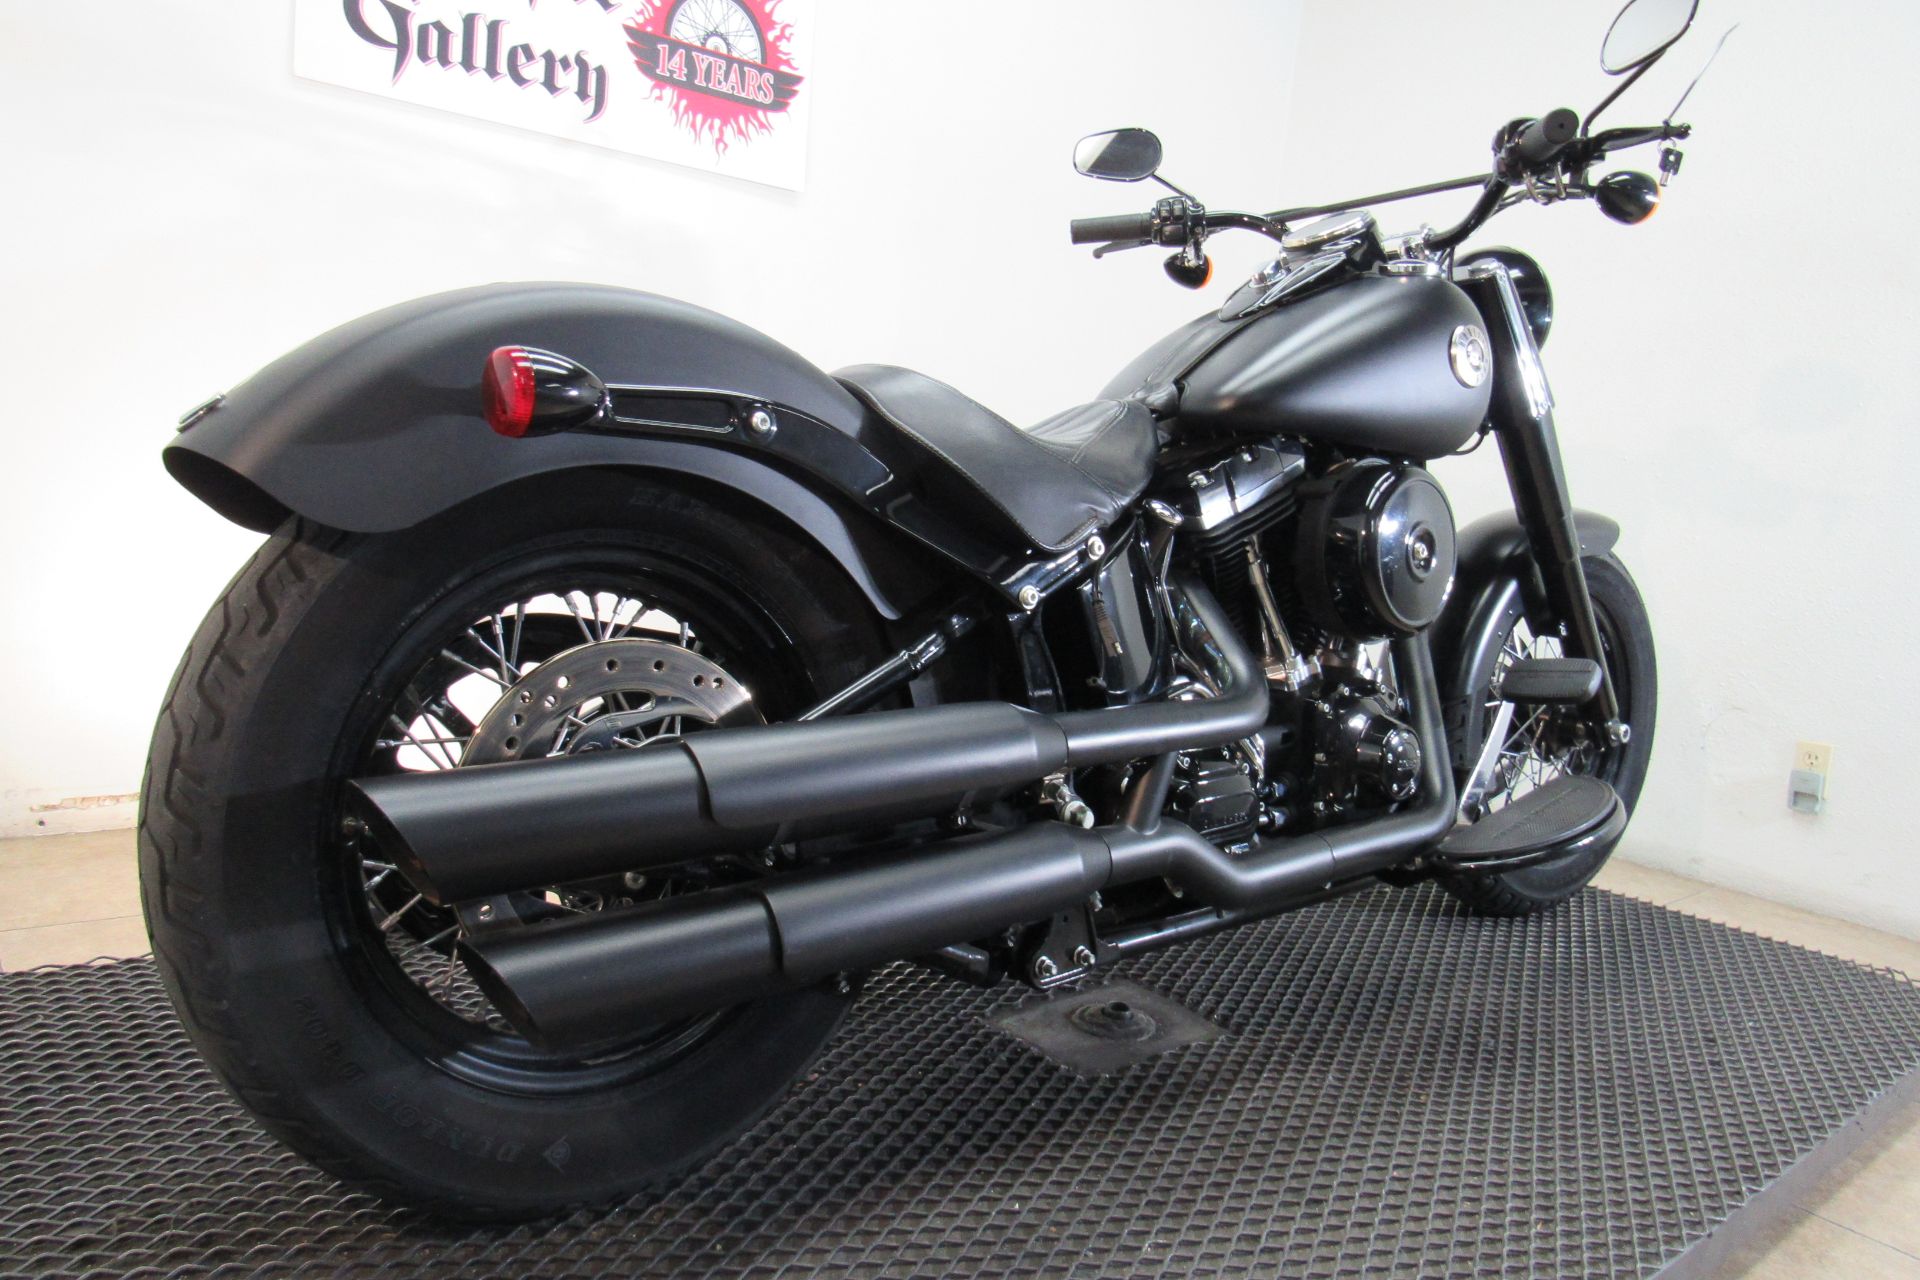 2014 Harley-Davidson Softail Slim® in Temecula, California - Photo 23